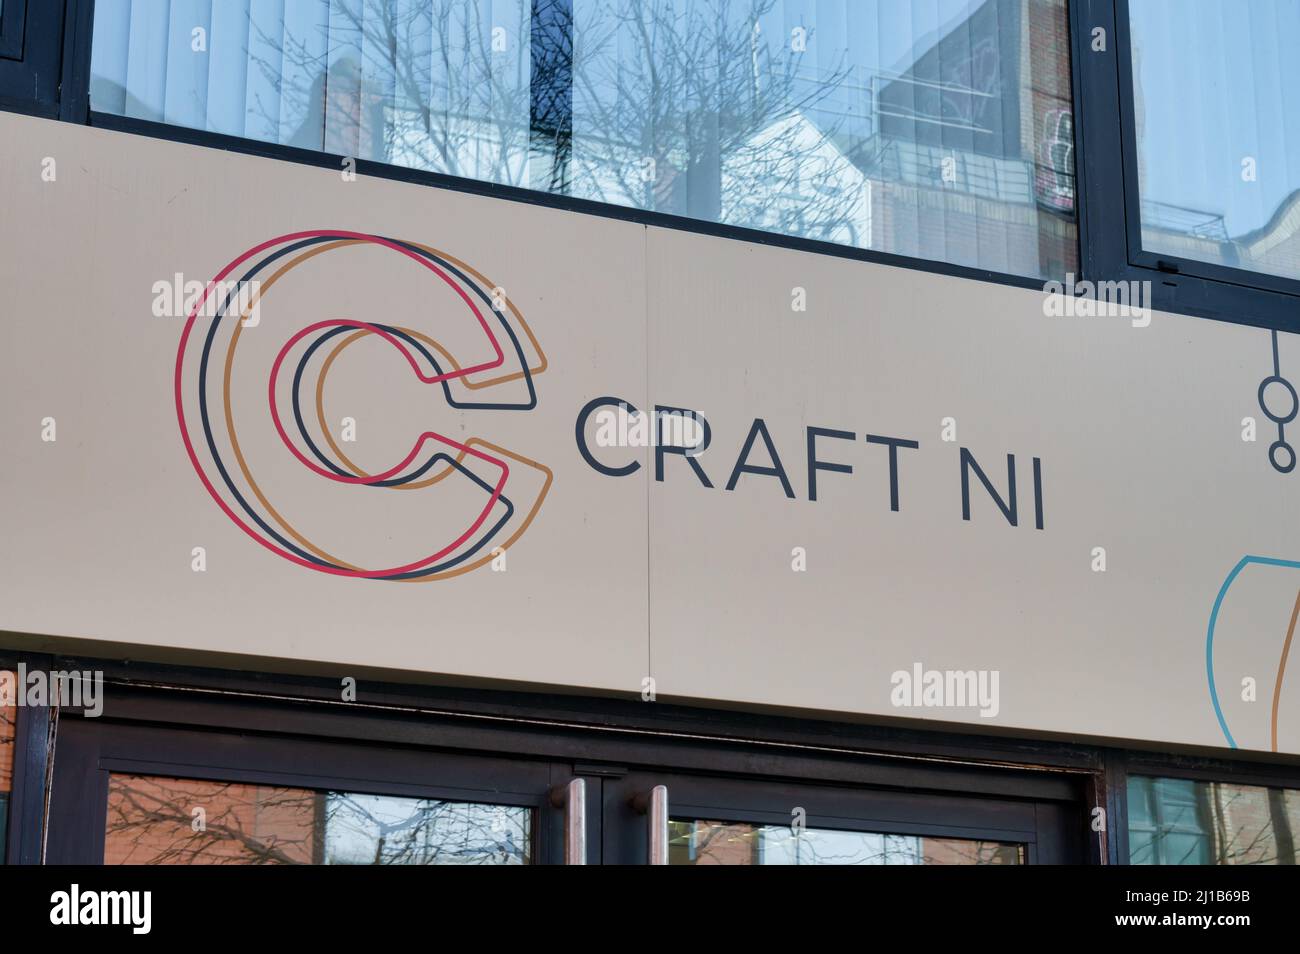 Belfast, UK- Feb 21, 2022:The sign for Craft NI in Belfast Northern Ireland. Stock Photo